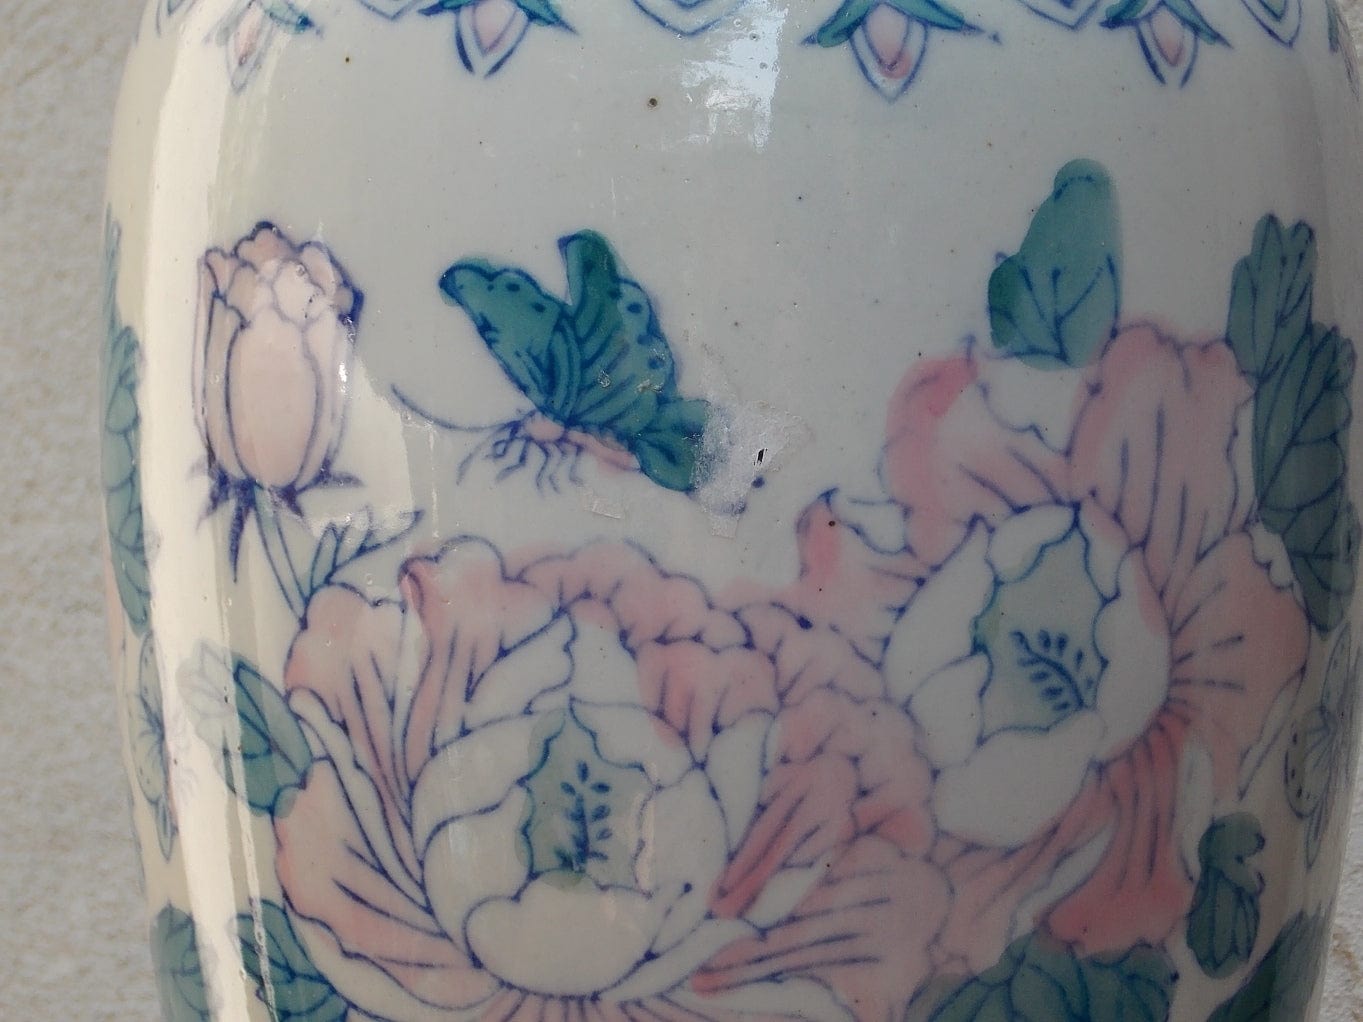 I Like Mike's Mid Century Modern Wall Decor & Art Large Ceramic White Blue Pink Italian Vase, 1980s Chic, Handpainted